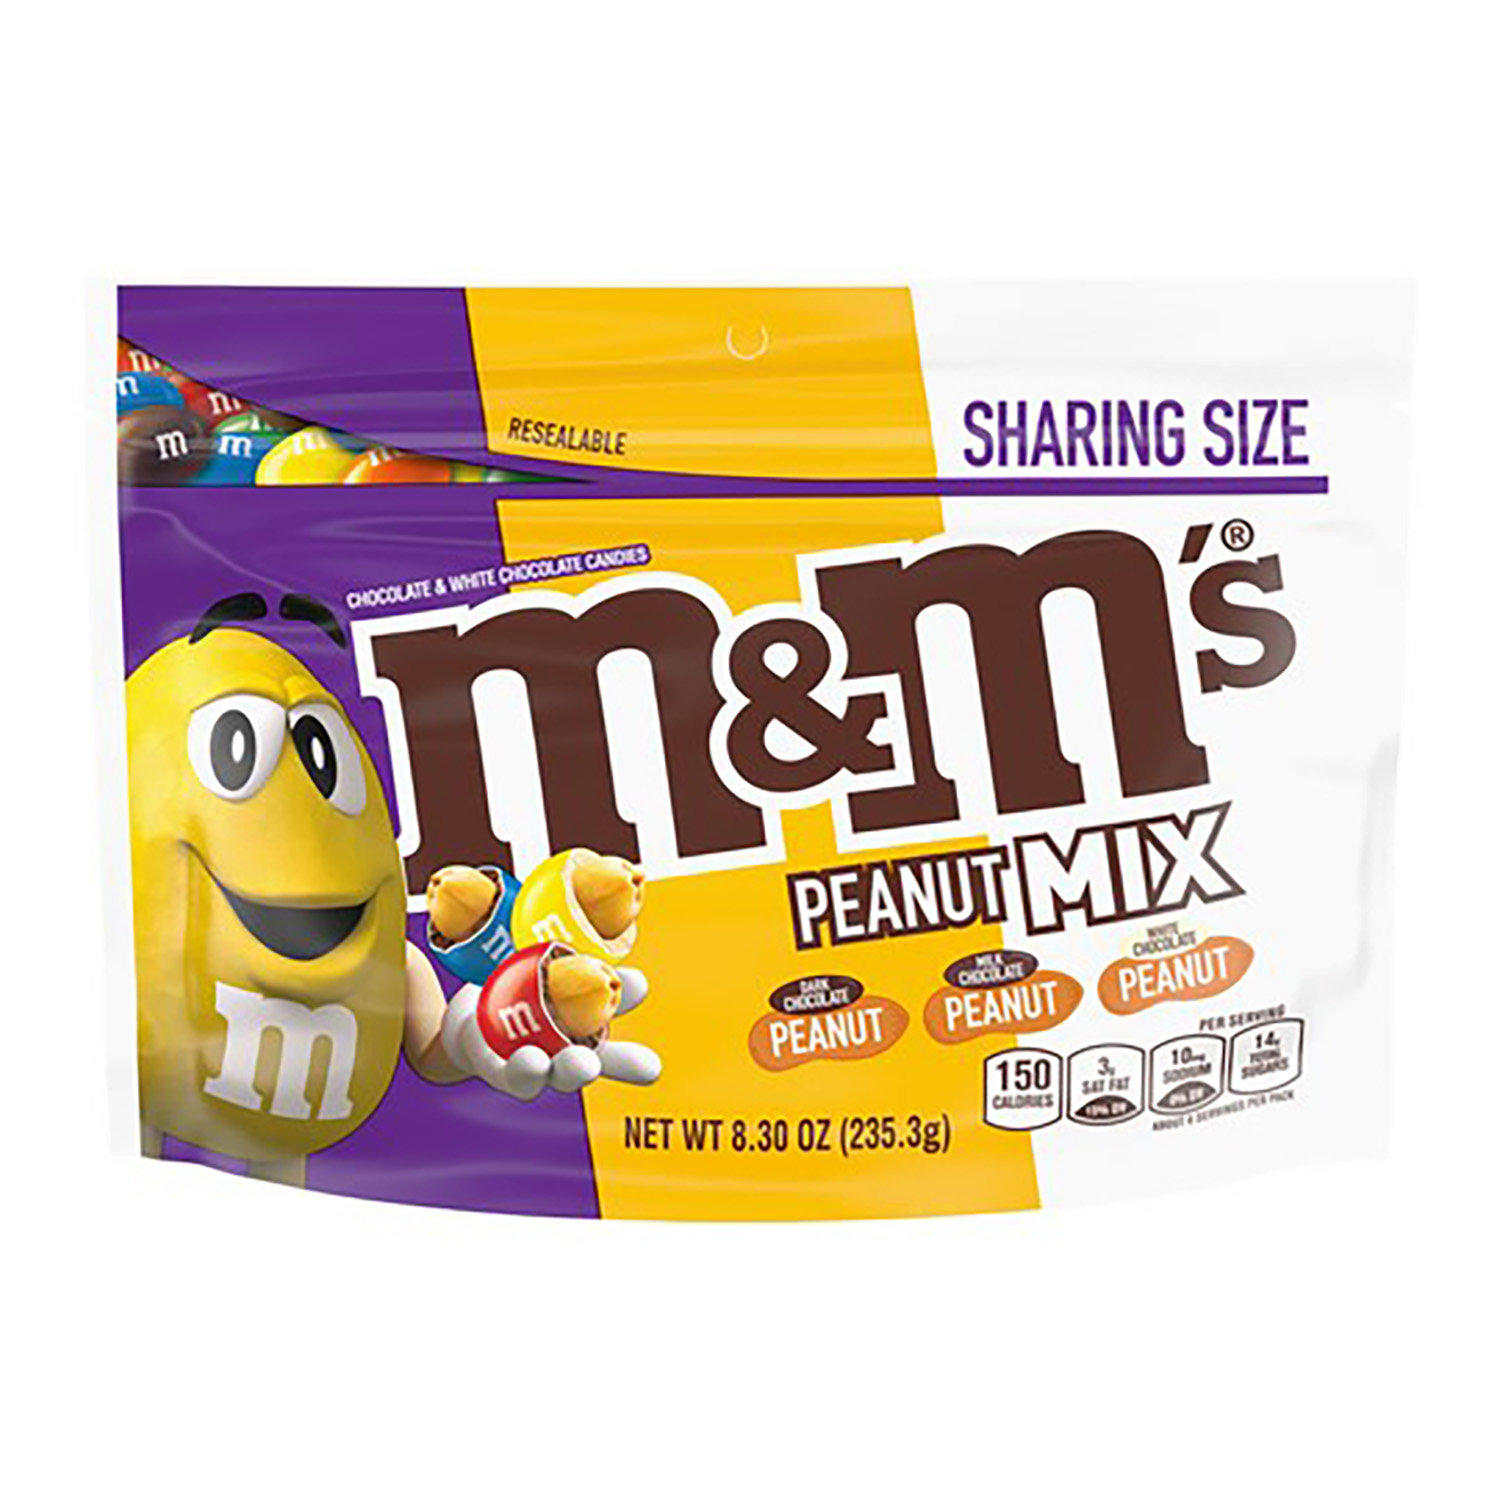 M&M's - M&M's, Chocolate Candies, Peanut (10 oz), Shop